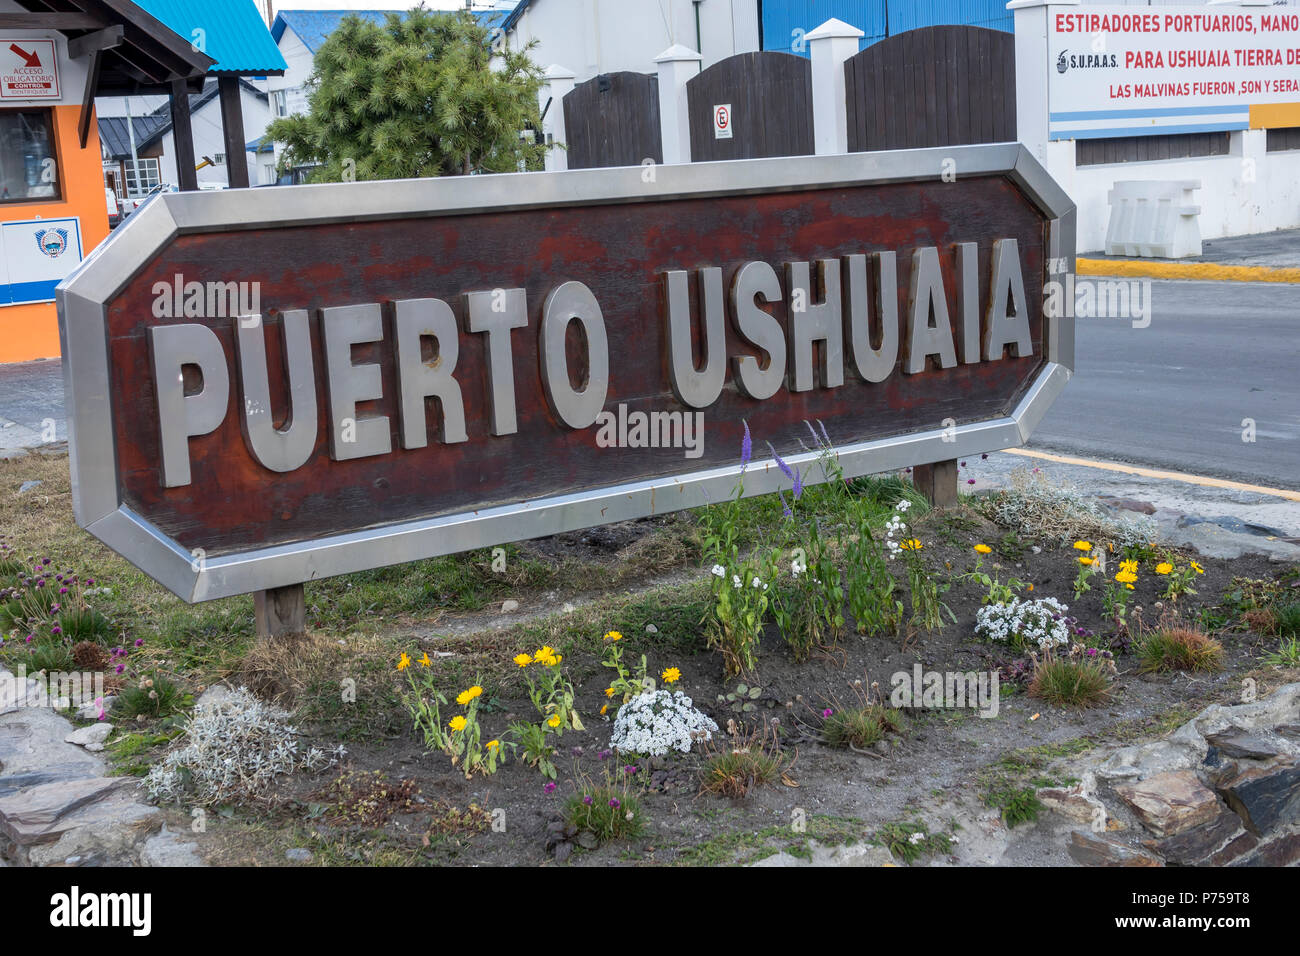 Puerto Ushuaia firmare all'entrata al porto di Ushuaia, Ushuaia, Argentina Foto Stock